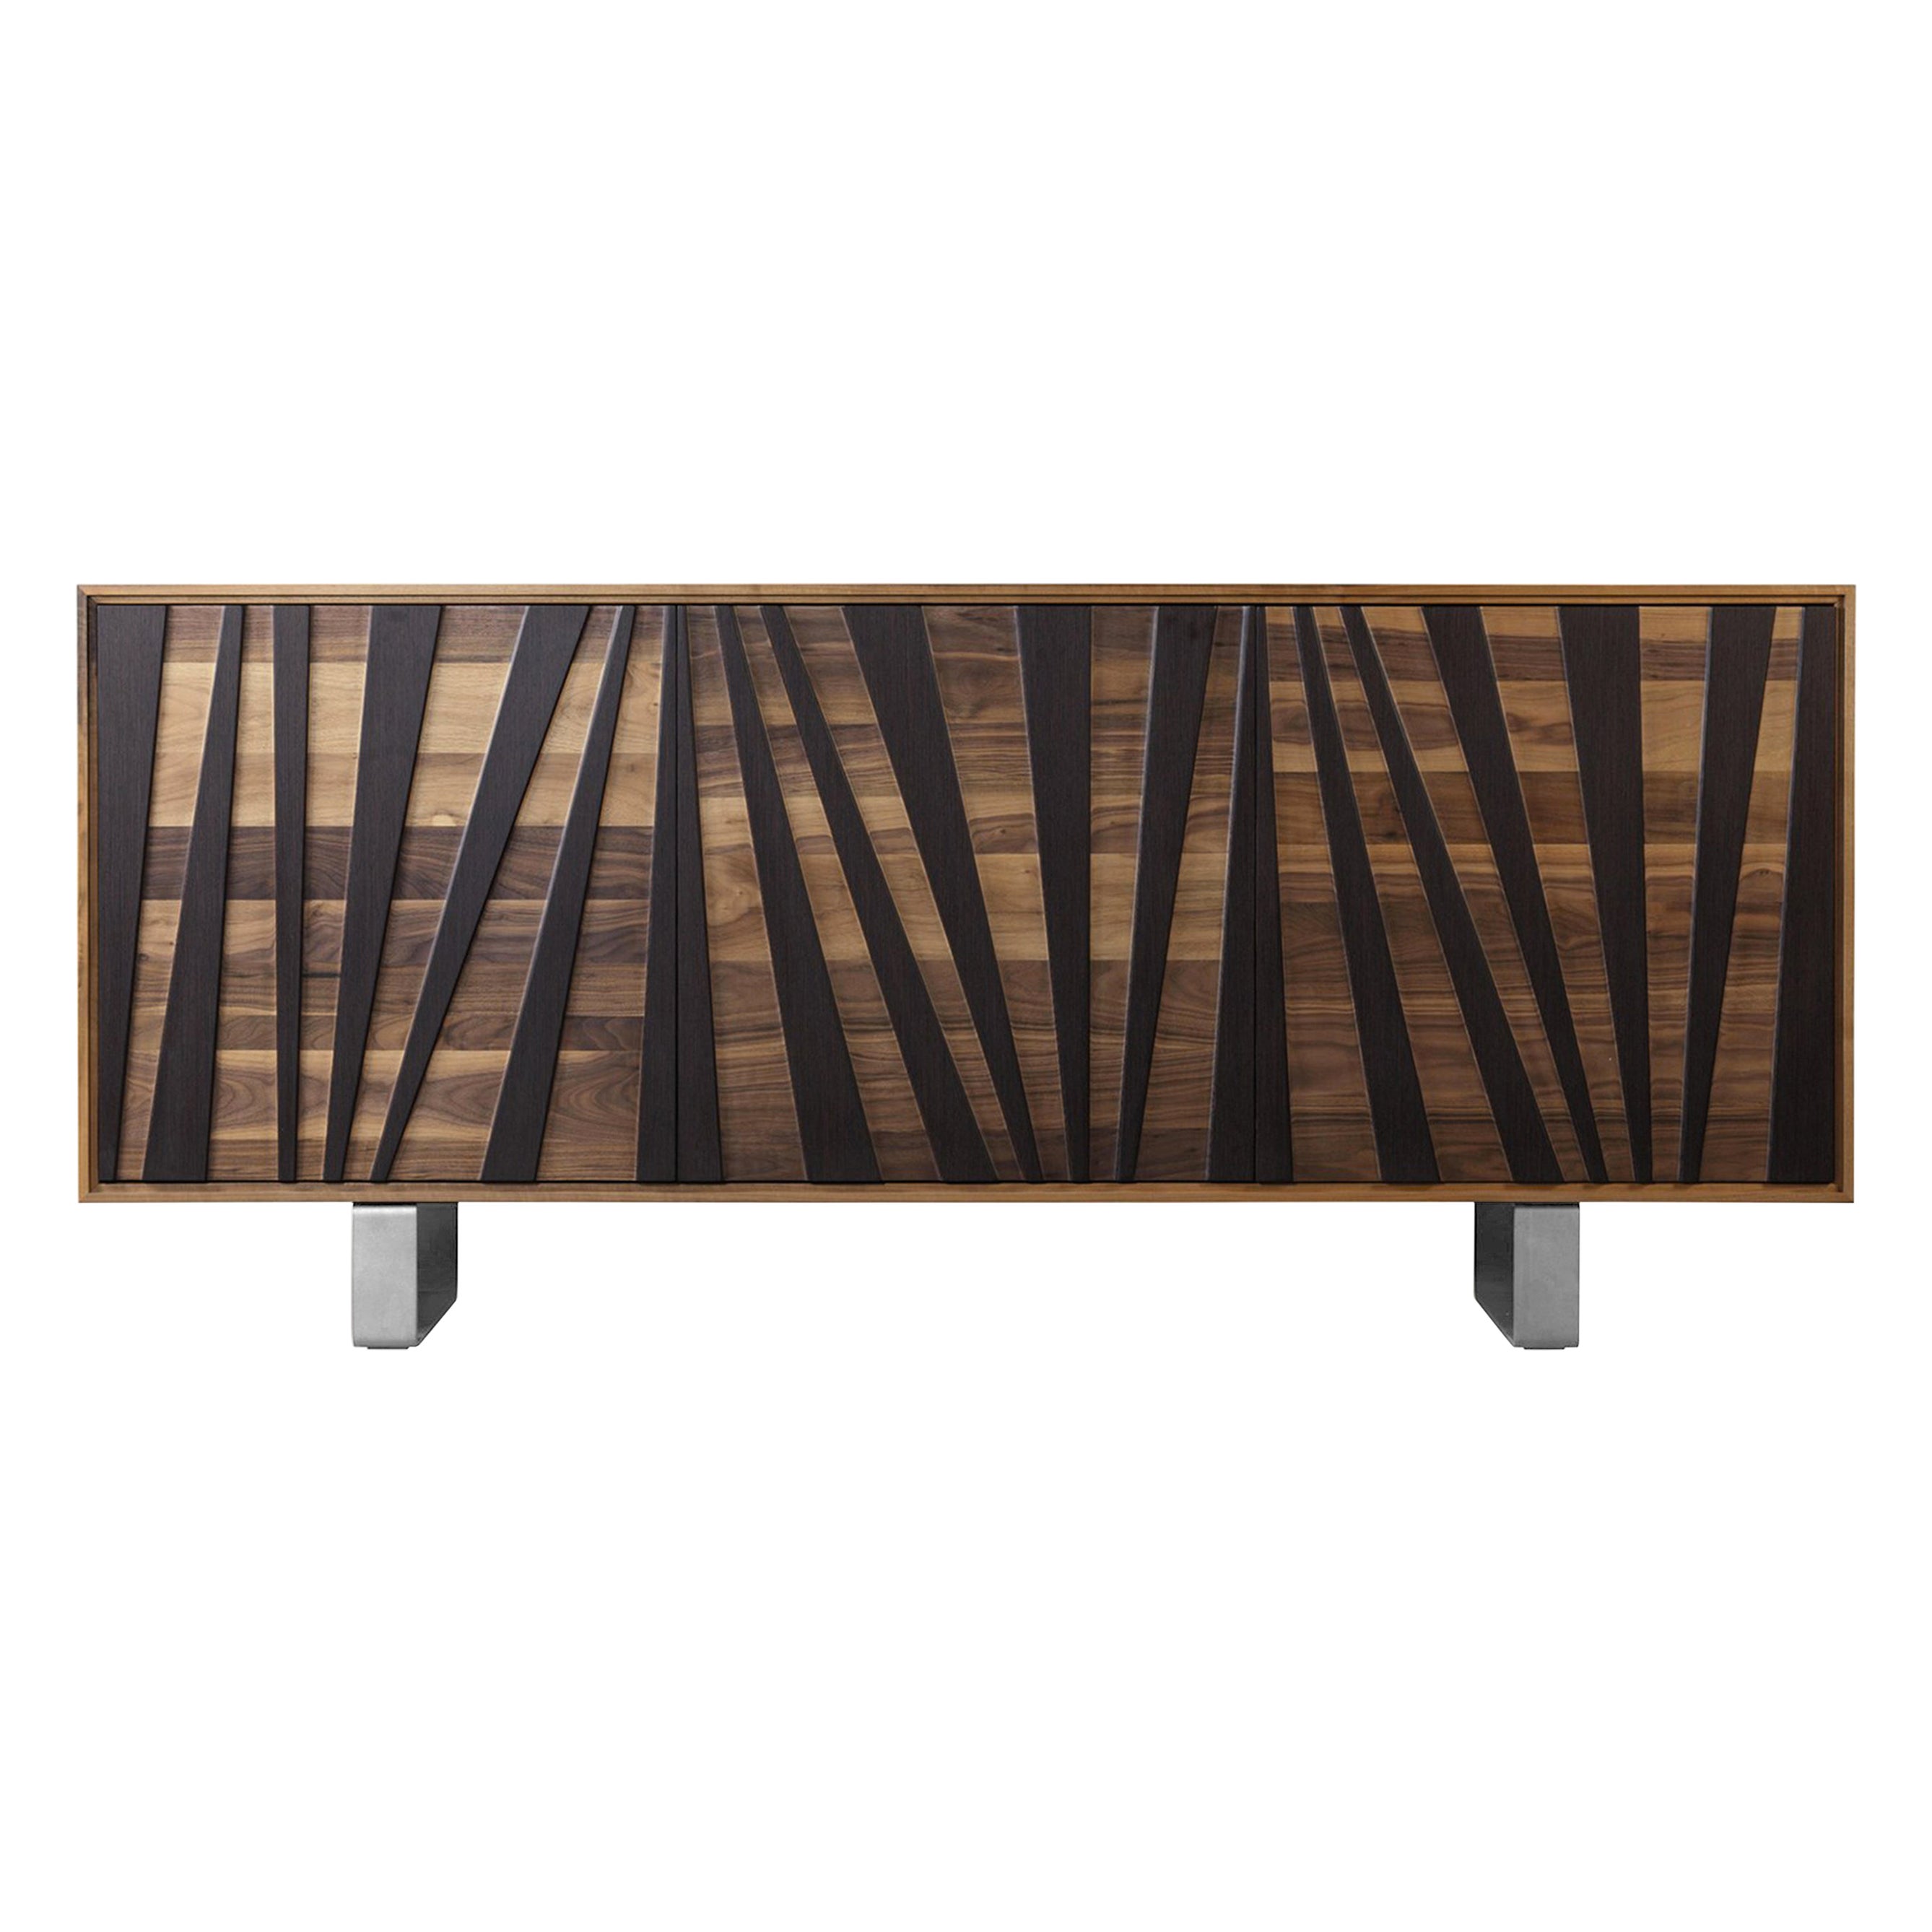 Materia Ventaglio Solid Wood Sideboard, Walnut & Wengè, Contemporary For Sale